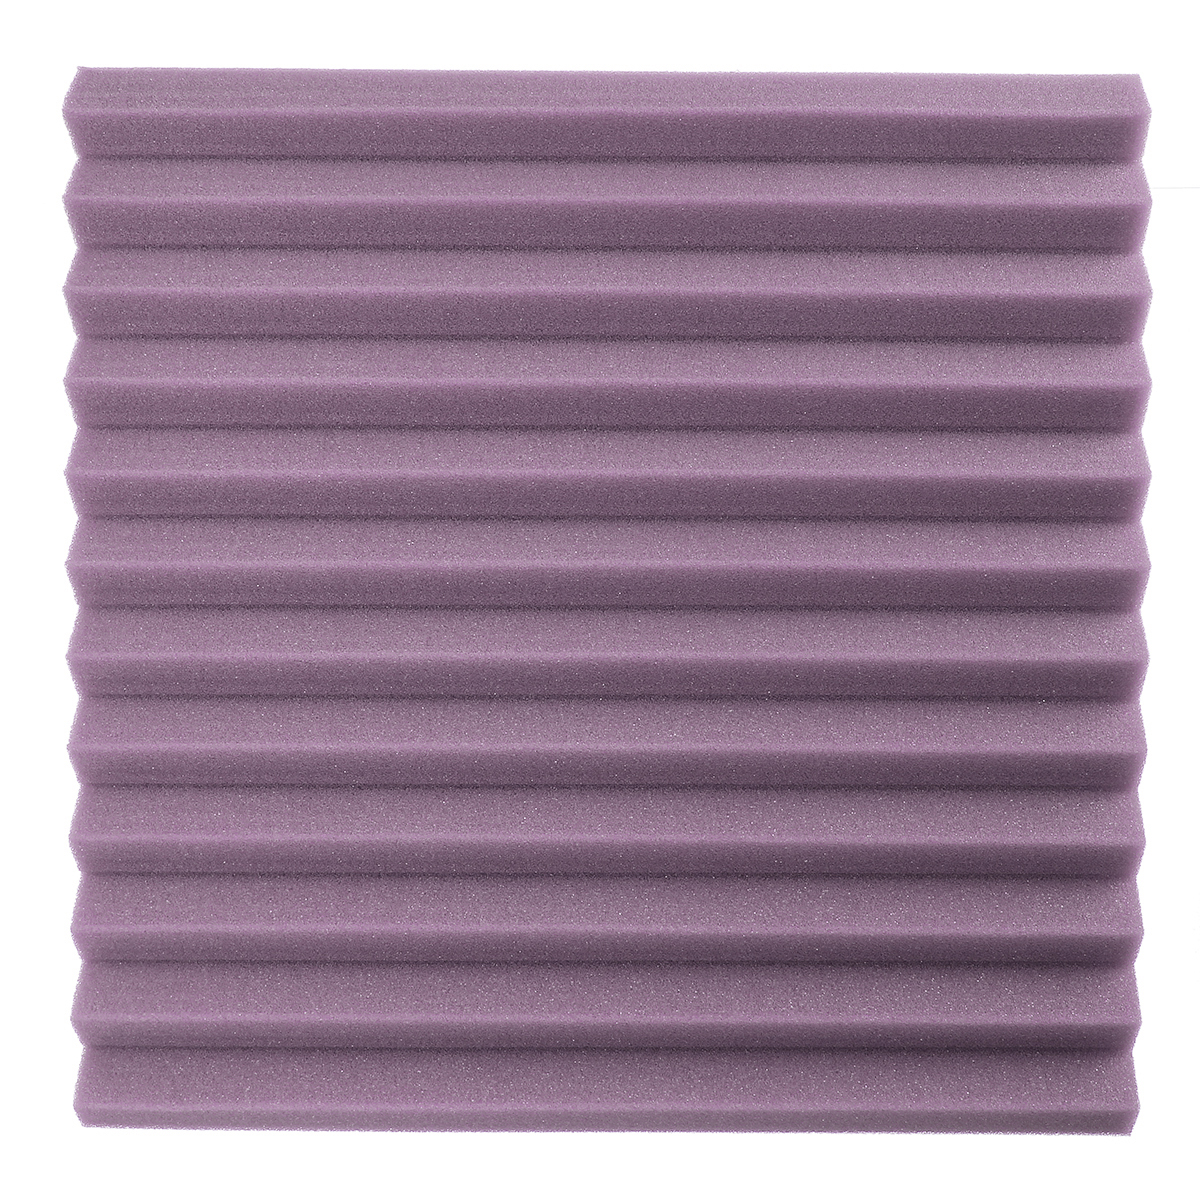 12Pcs Wedge Acoustic Foam Panels 25mm Sound Proofing Foam Room Studio Tile Treatments